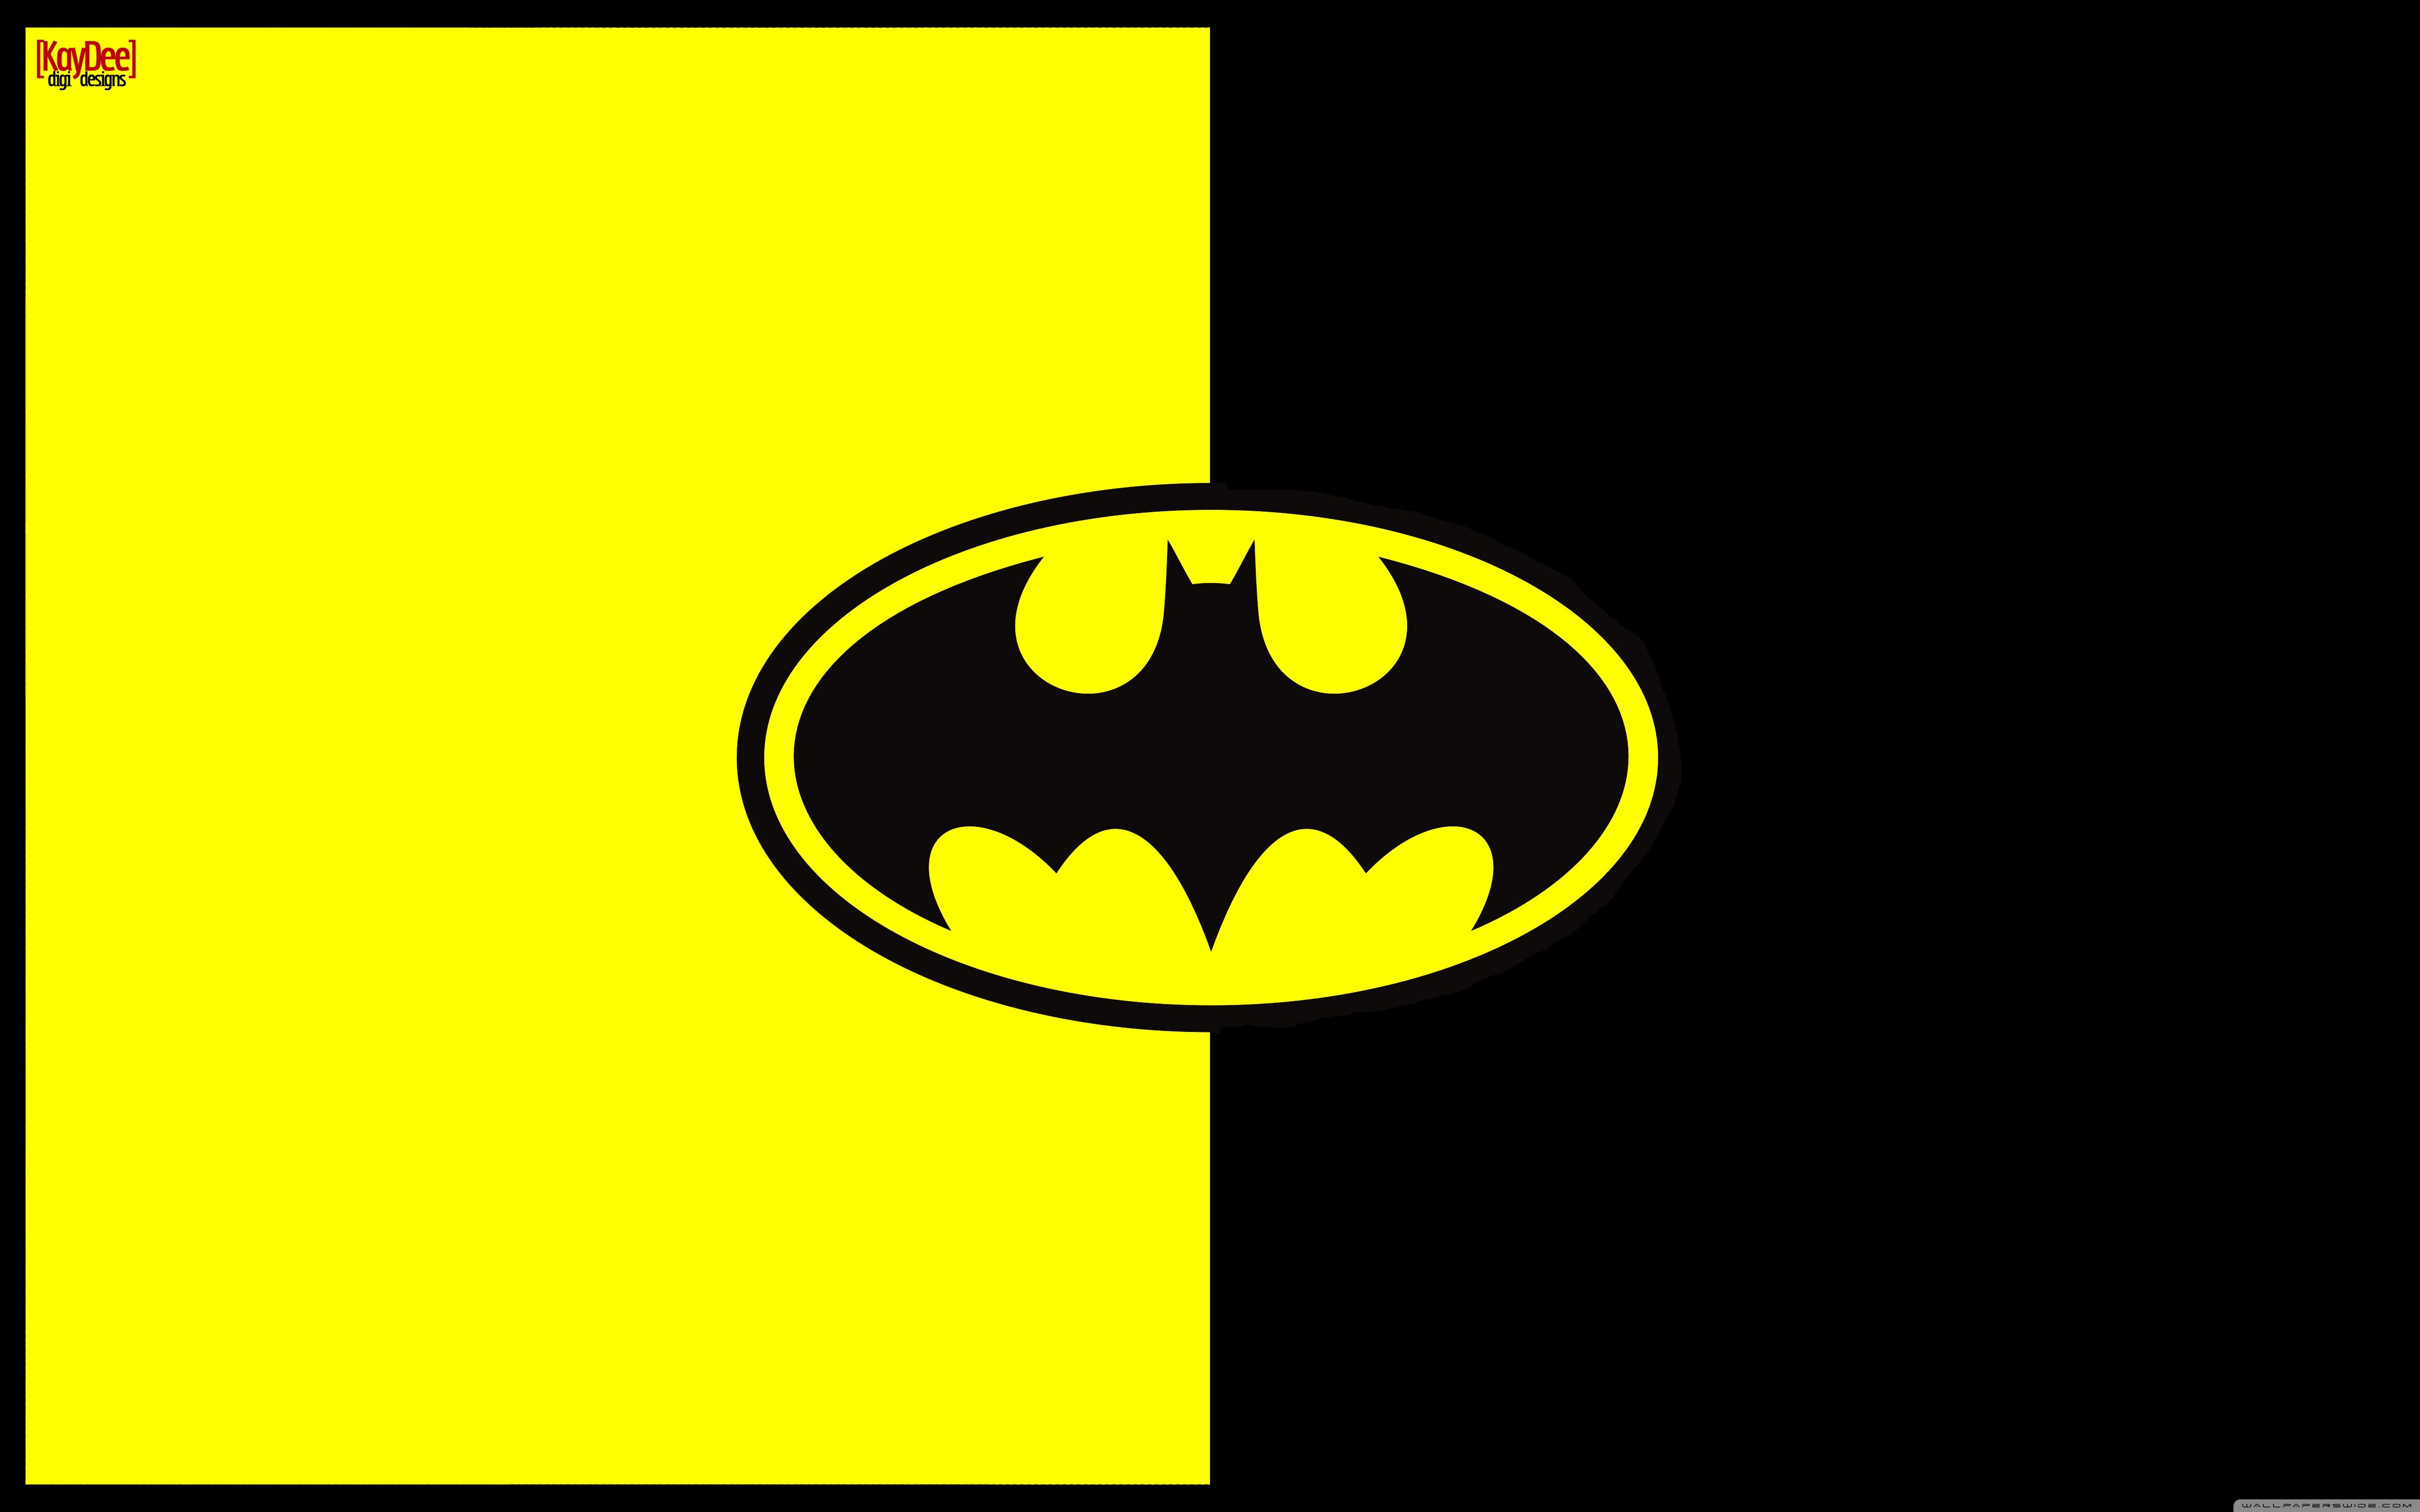 Batman Logo Wallpaper Background HD 326 - HD Wallpapers Site